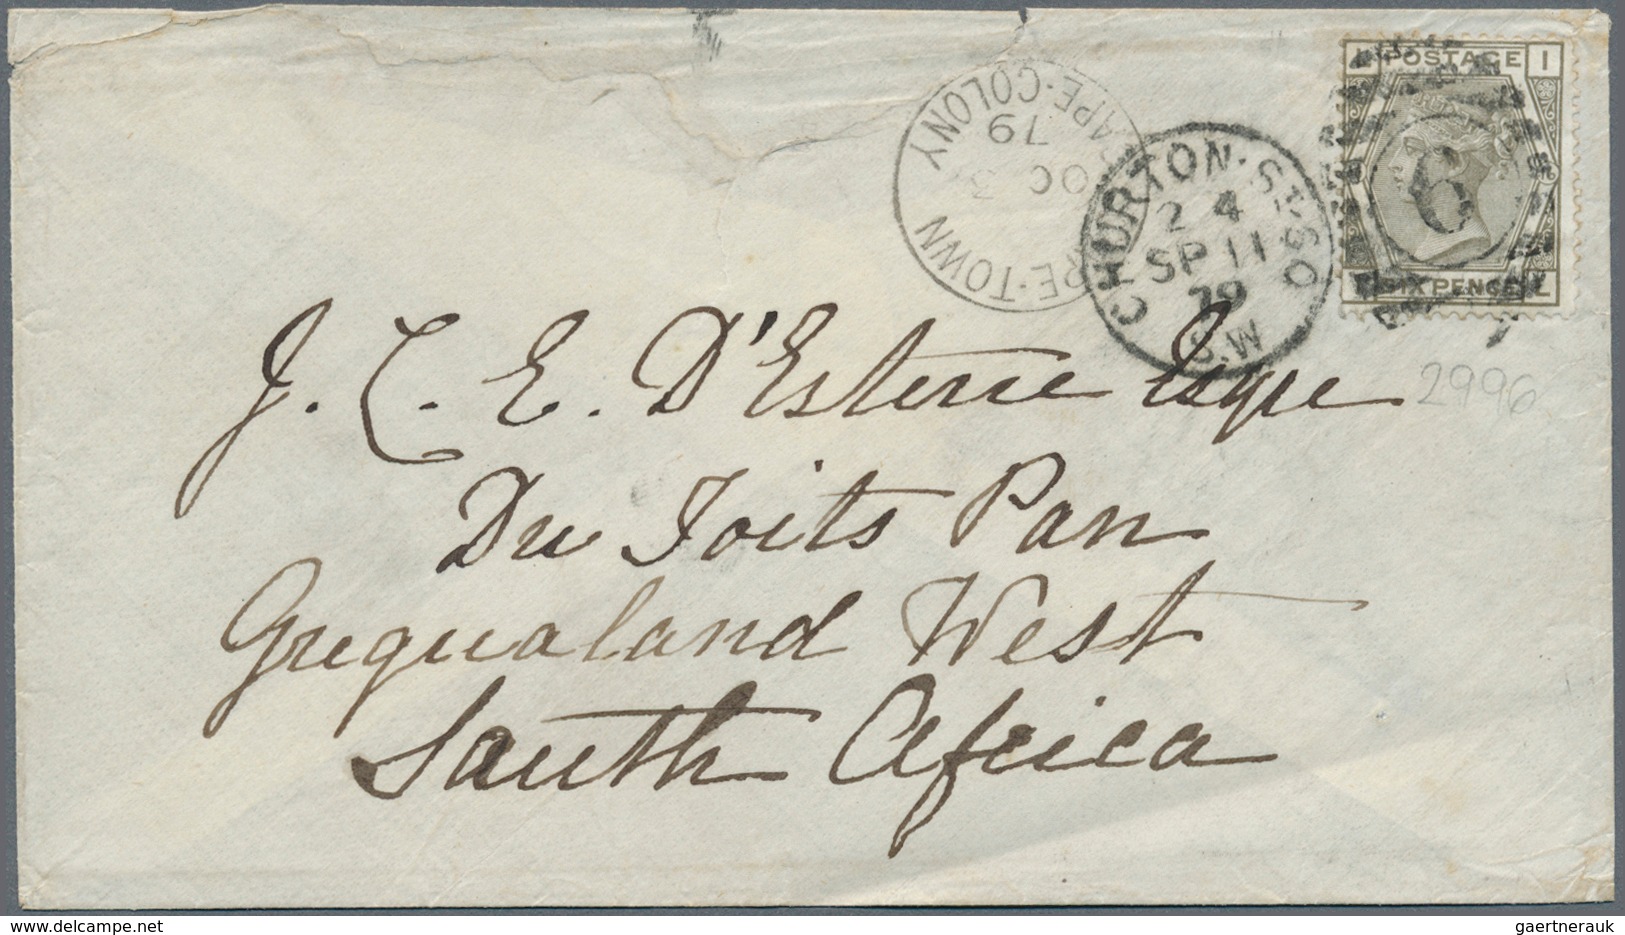 Griqualand-West: Incoming Mail, 1879, UK, 6p Grey Plate 16 Canc. Duplex "CHURTON ST.SO SP 11 74" To - Griqualand West (1874-1879)